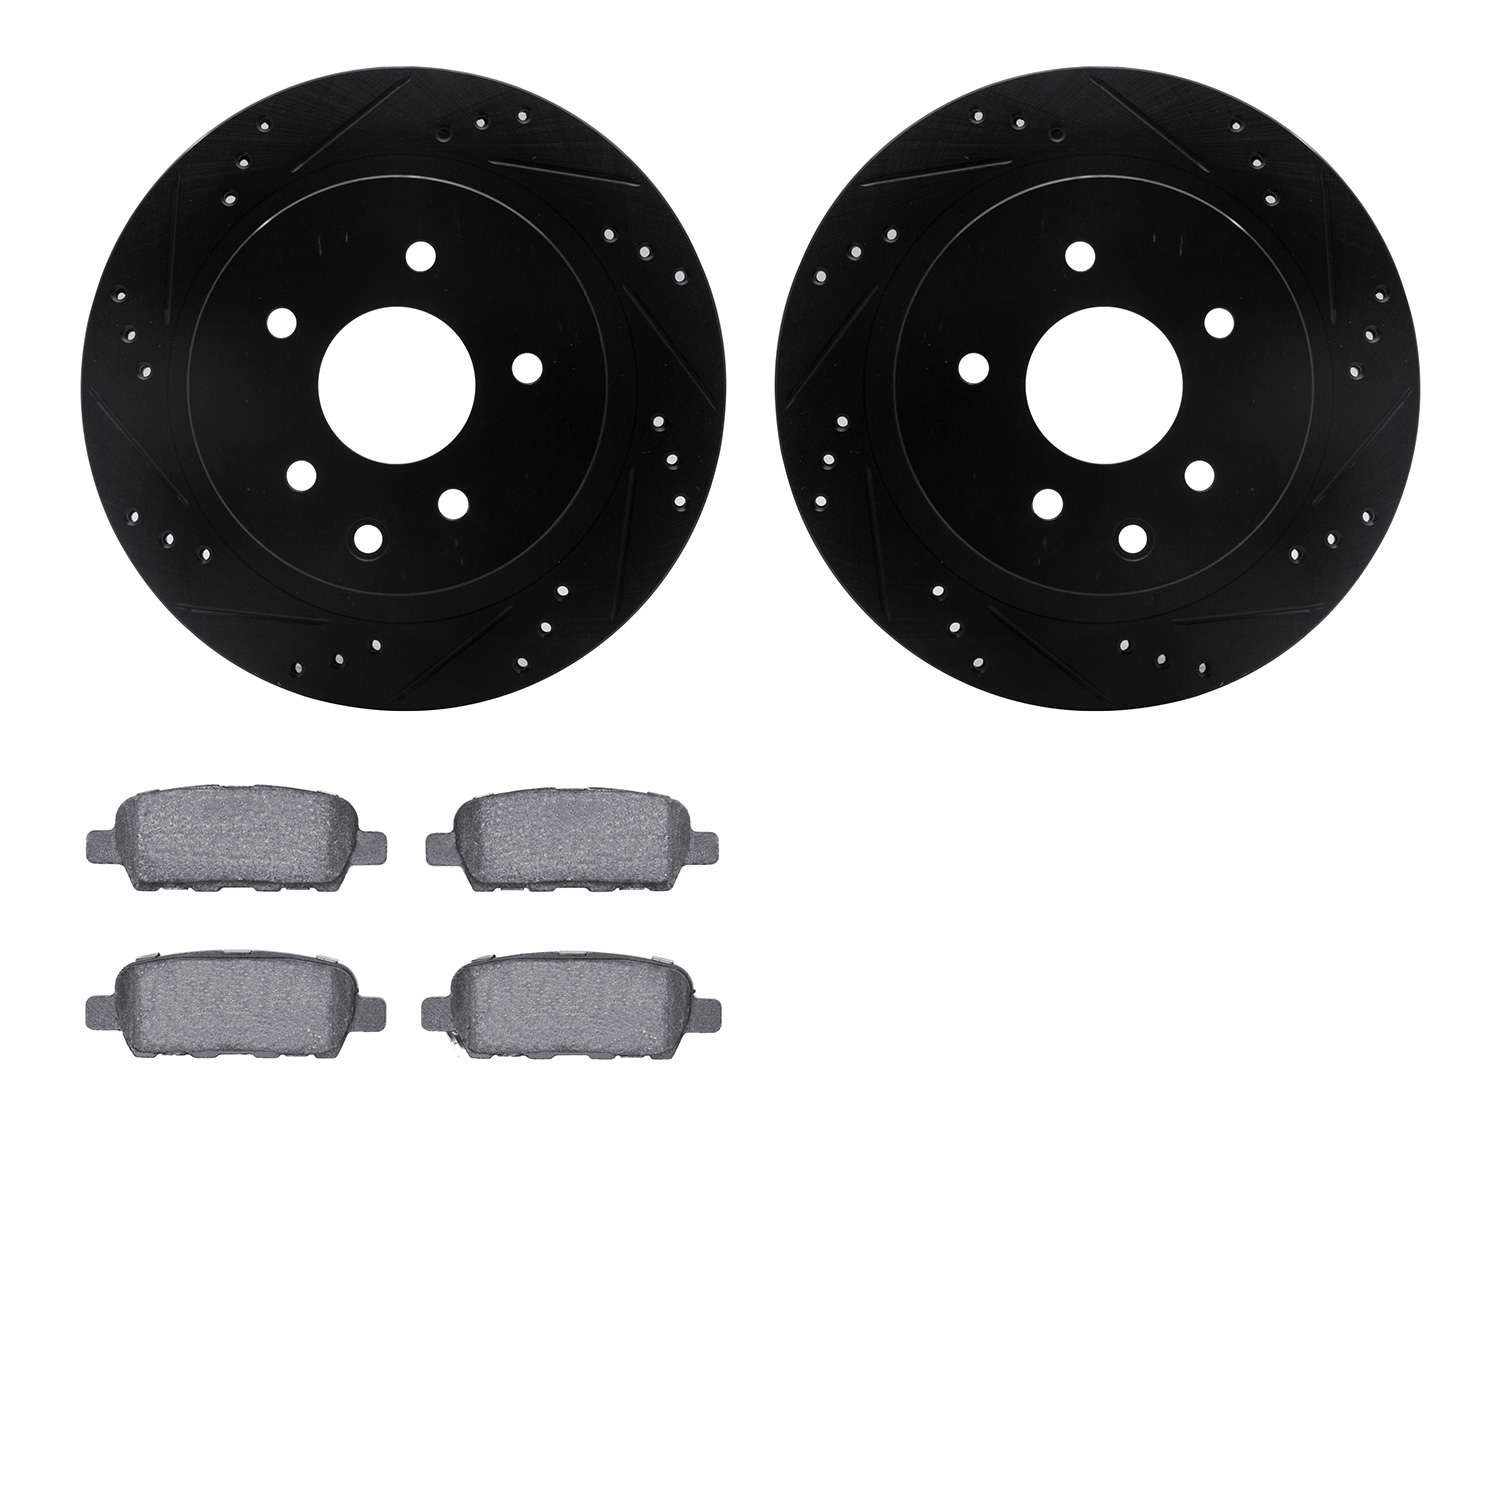 8302-67099 Drilled/Slotted Brake Rotors with 3000-Series Ceramic Brake Pads Kit [Black], Fits Select Multiple Makes/Models, Posi